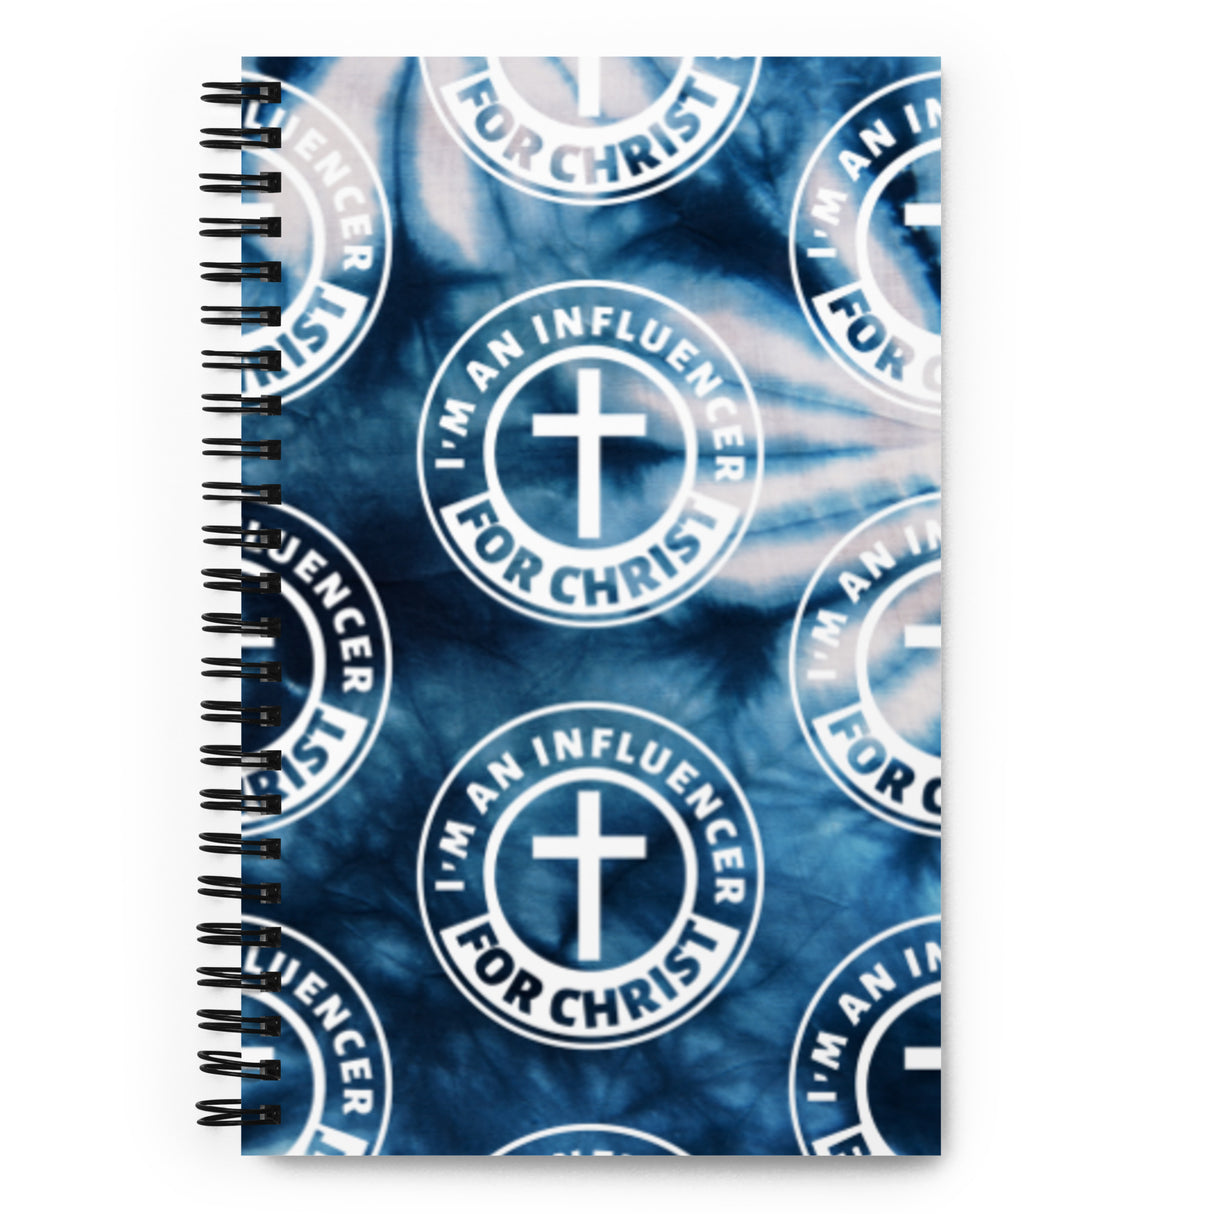 Influencer for Christ Tie Dye Multi Spiral Notebook